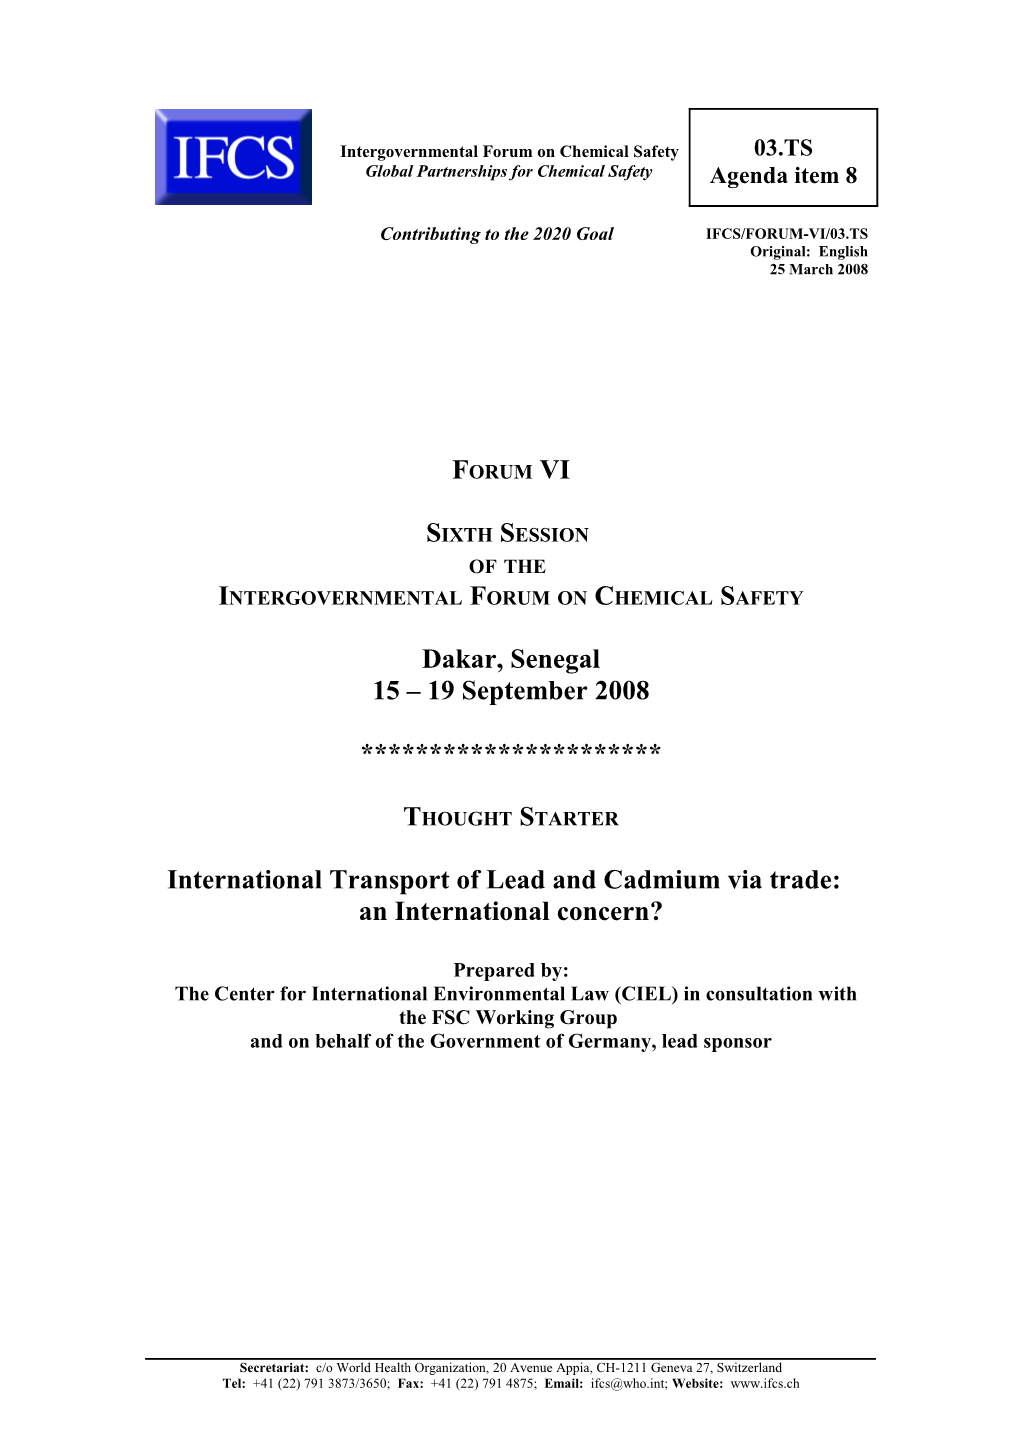 International Transport of Lead and Cadmium Via Trade